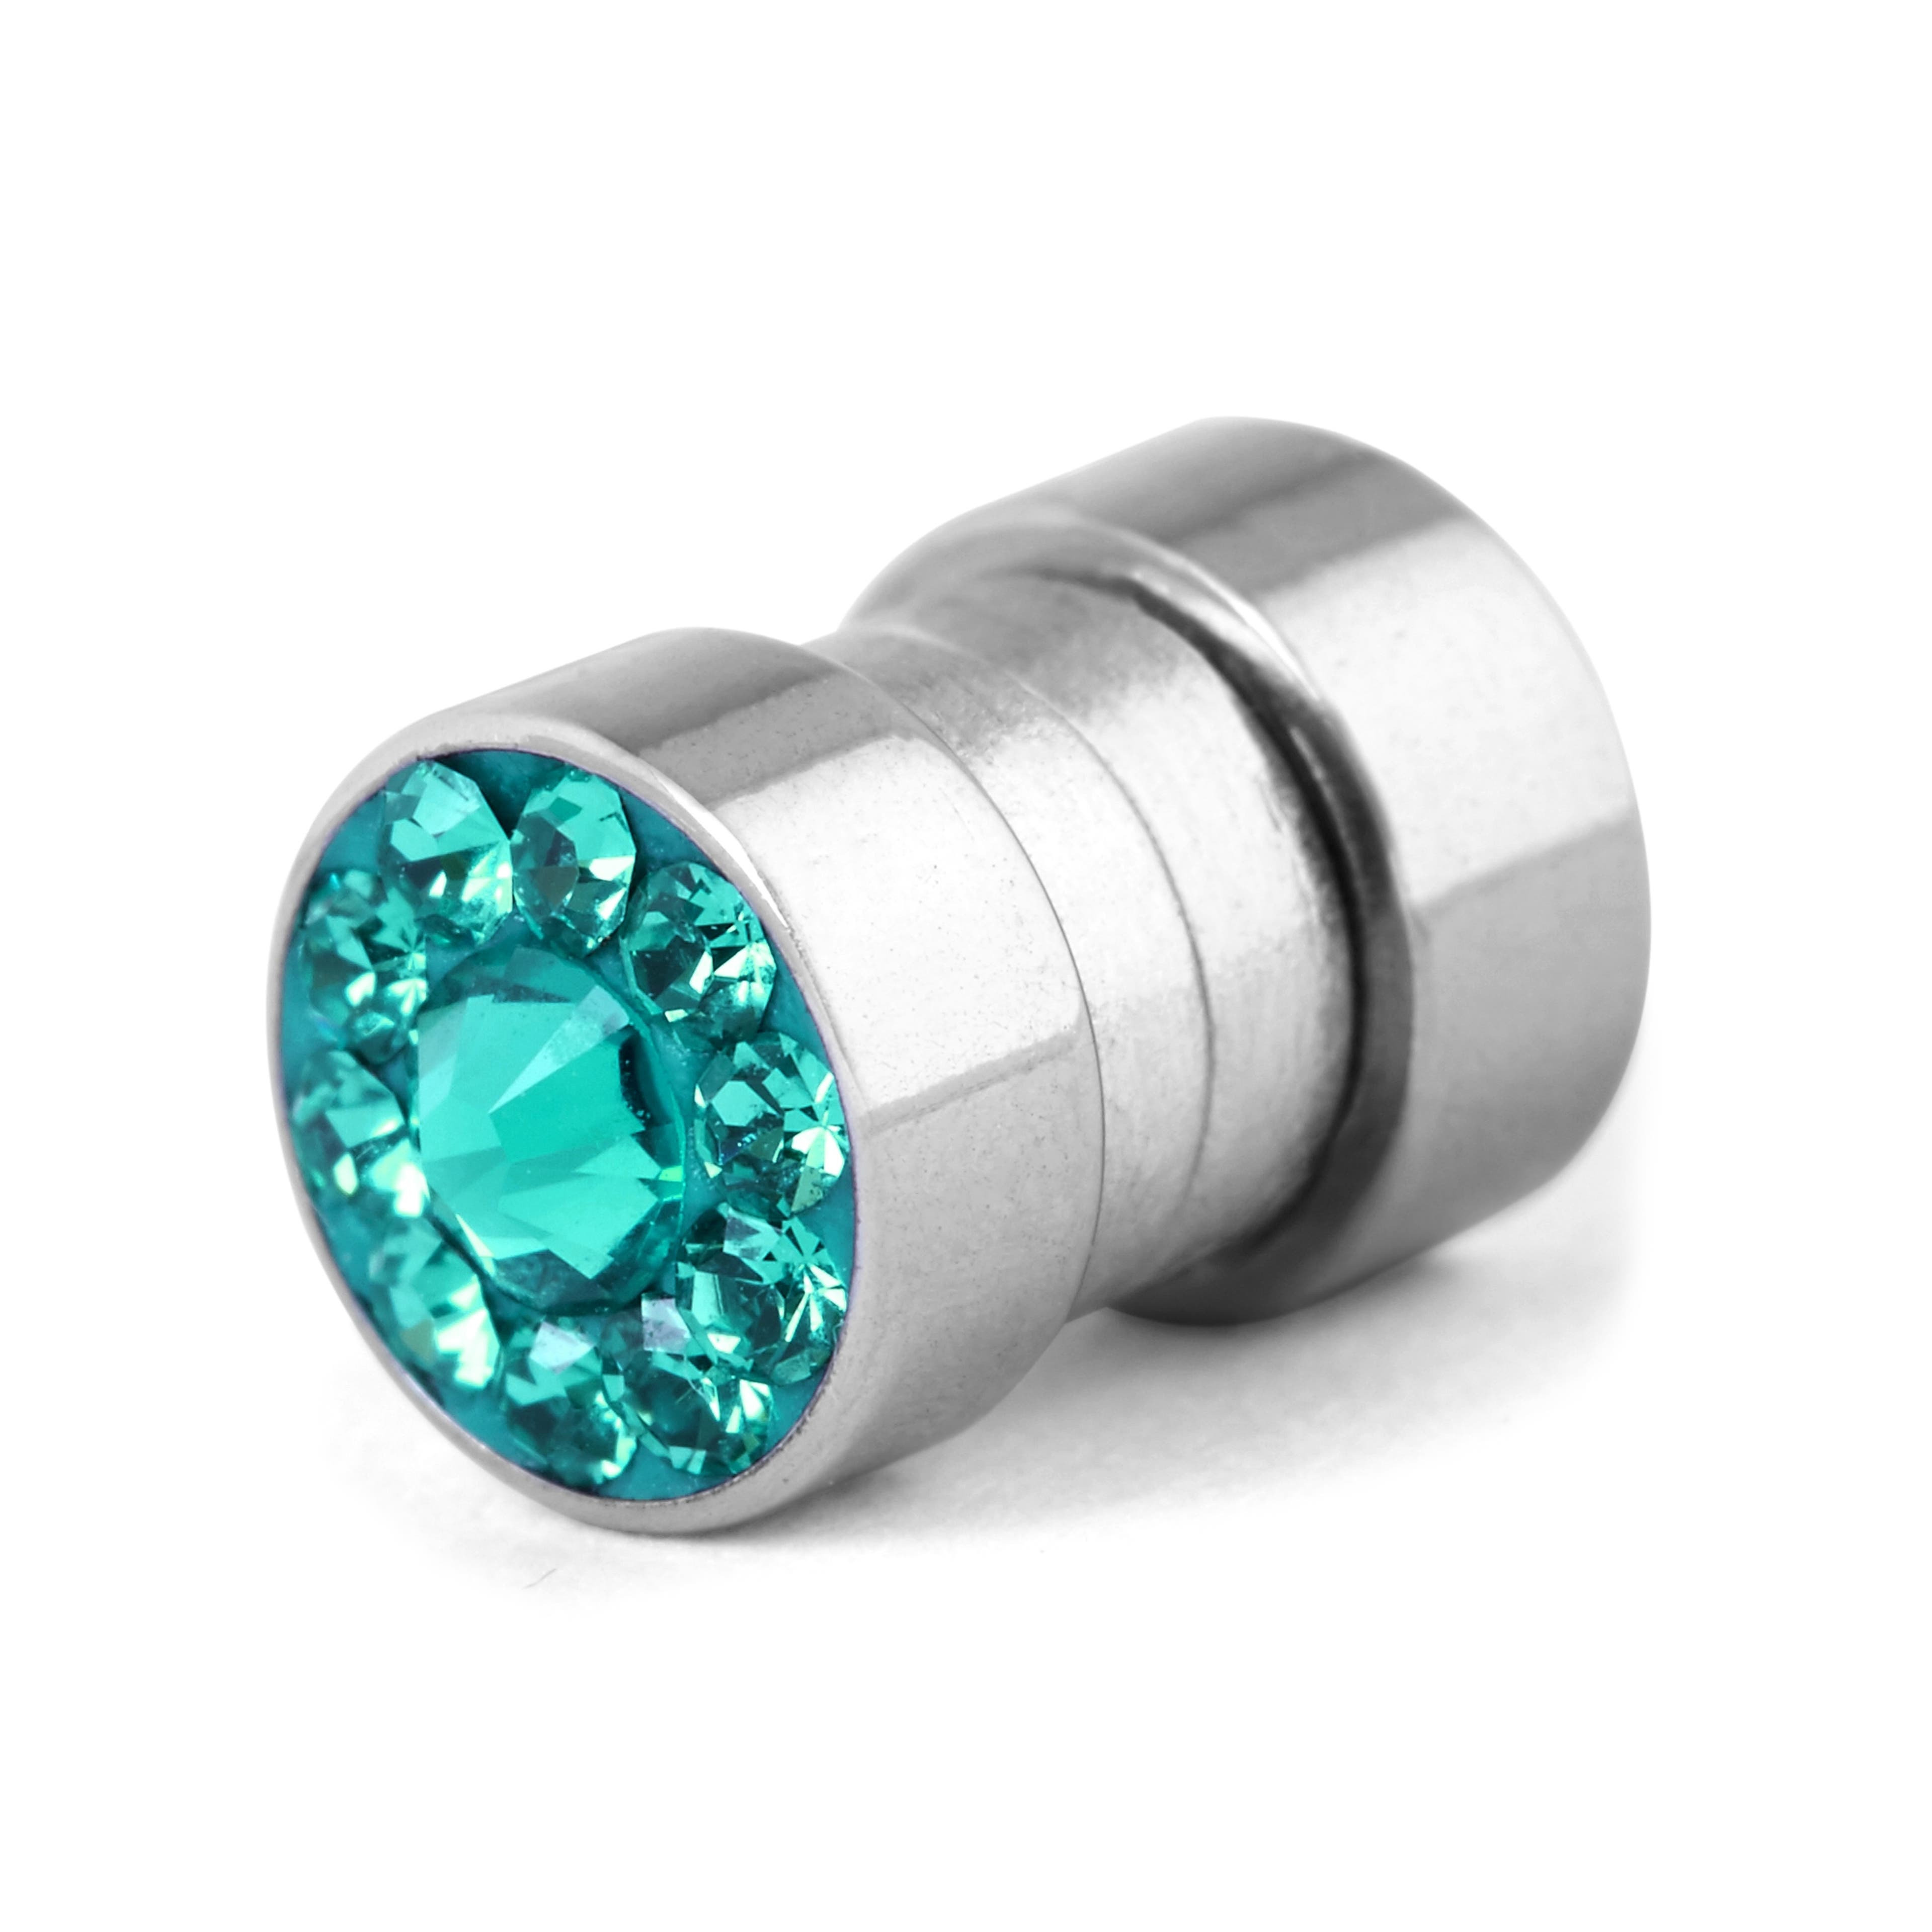 Blauer Kristall Magnet Ohrring 6mm 